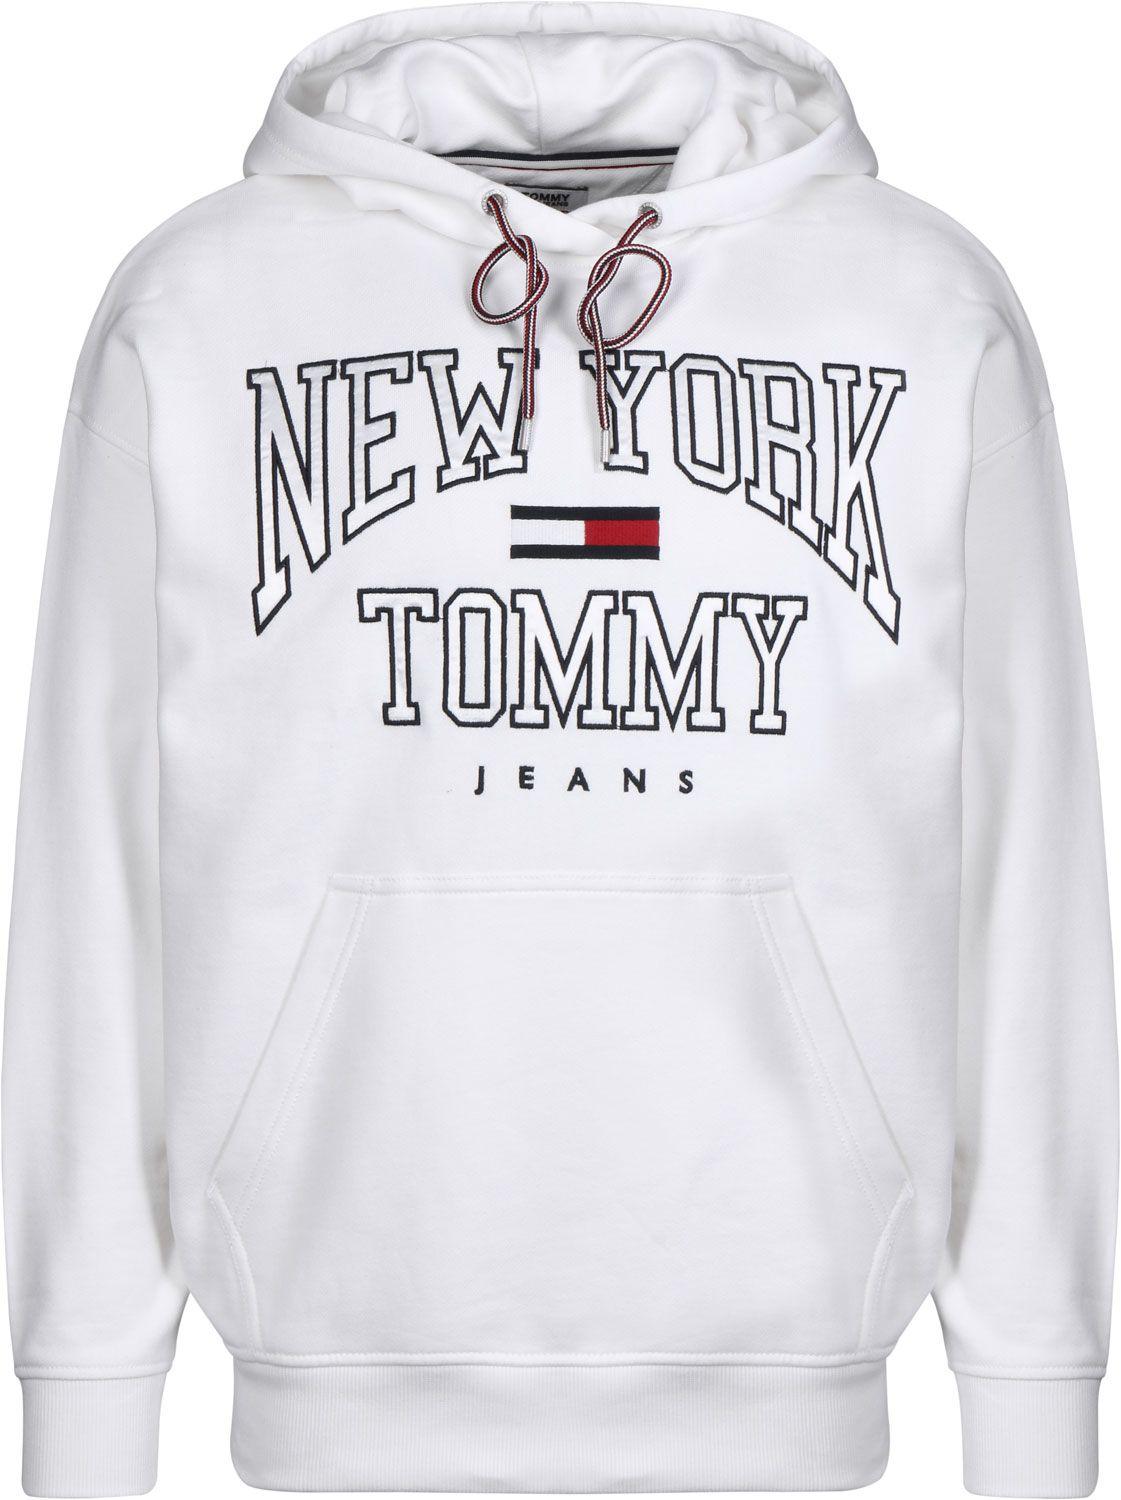 Boyfriend Logo - Tommy Jeans Boyfriend Logo W hoodie white